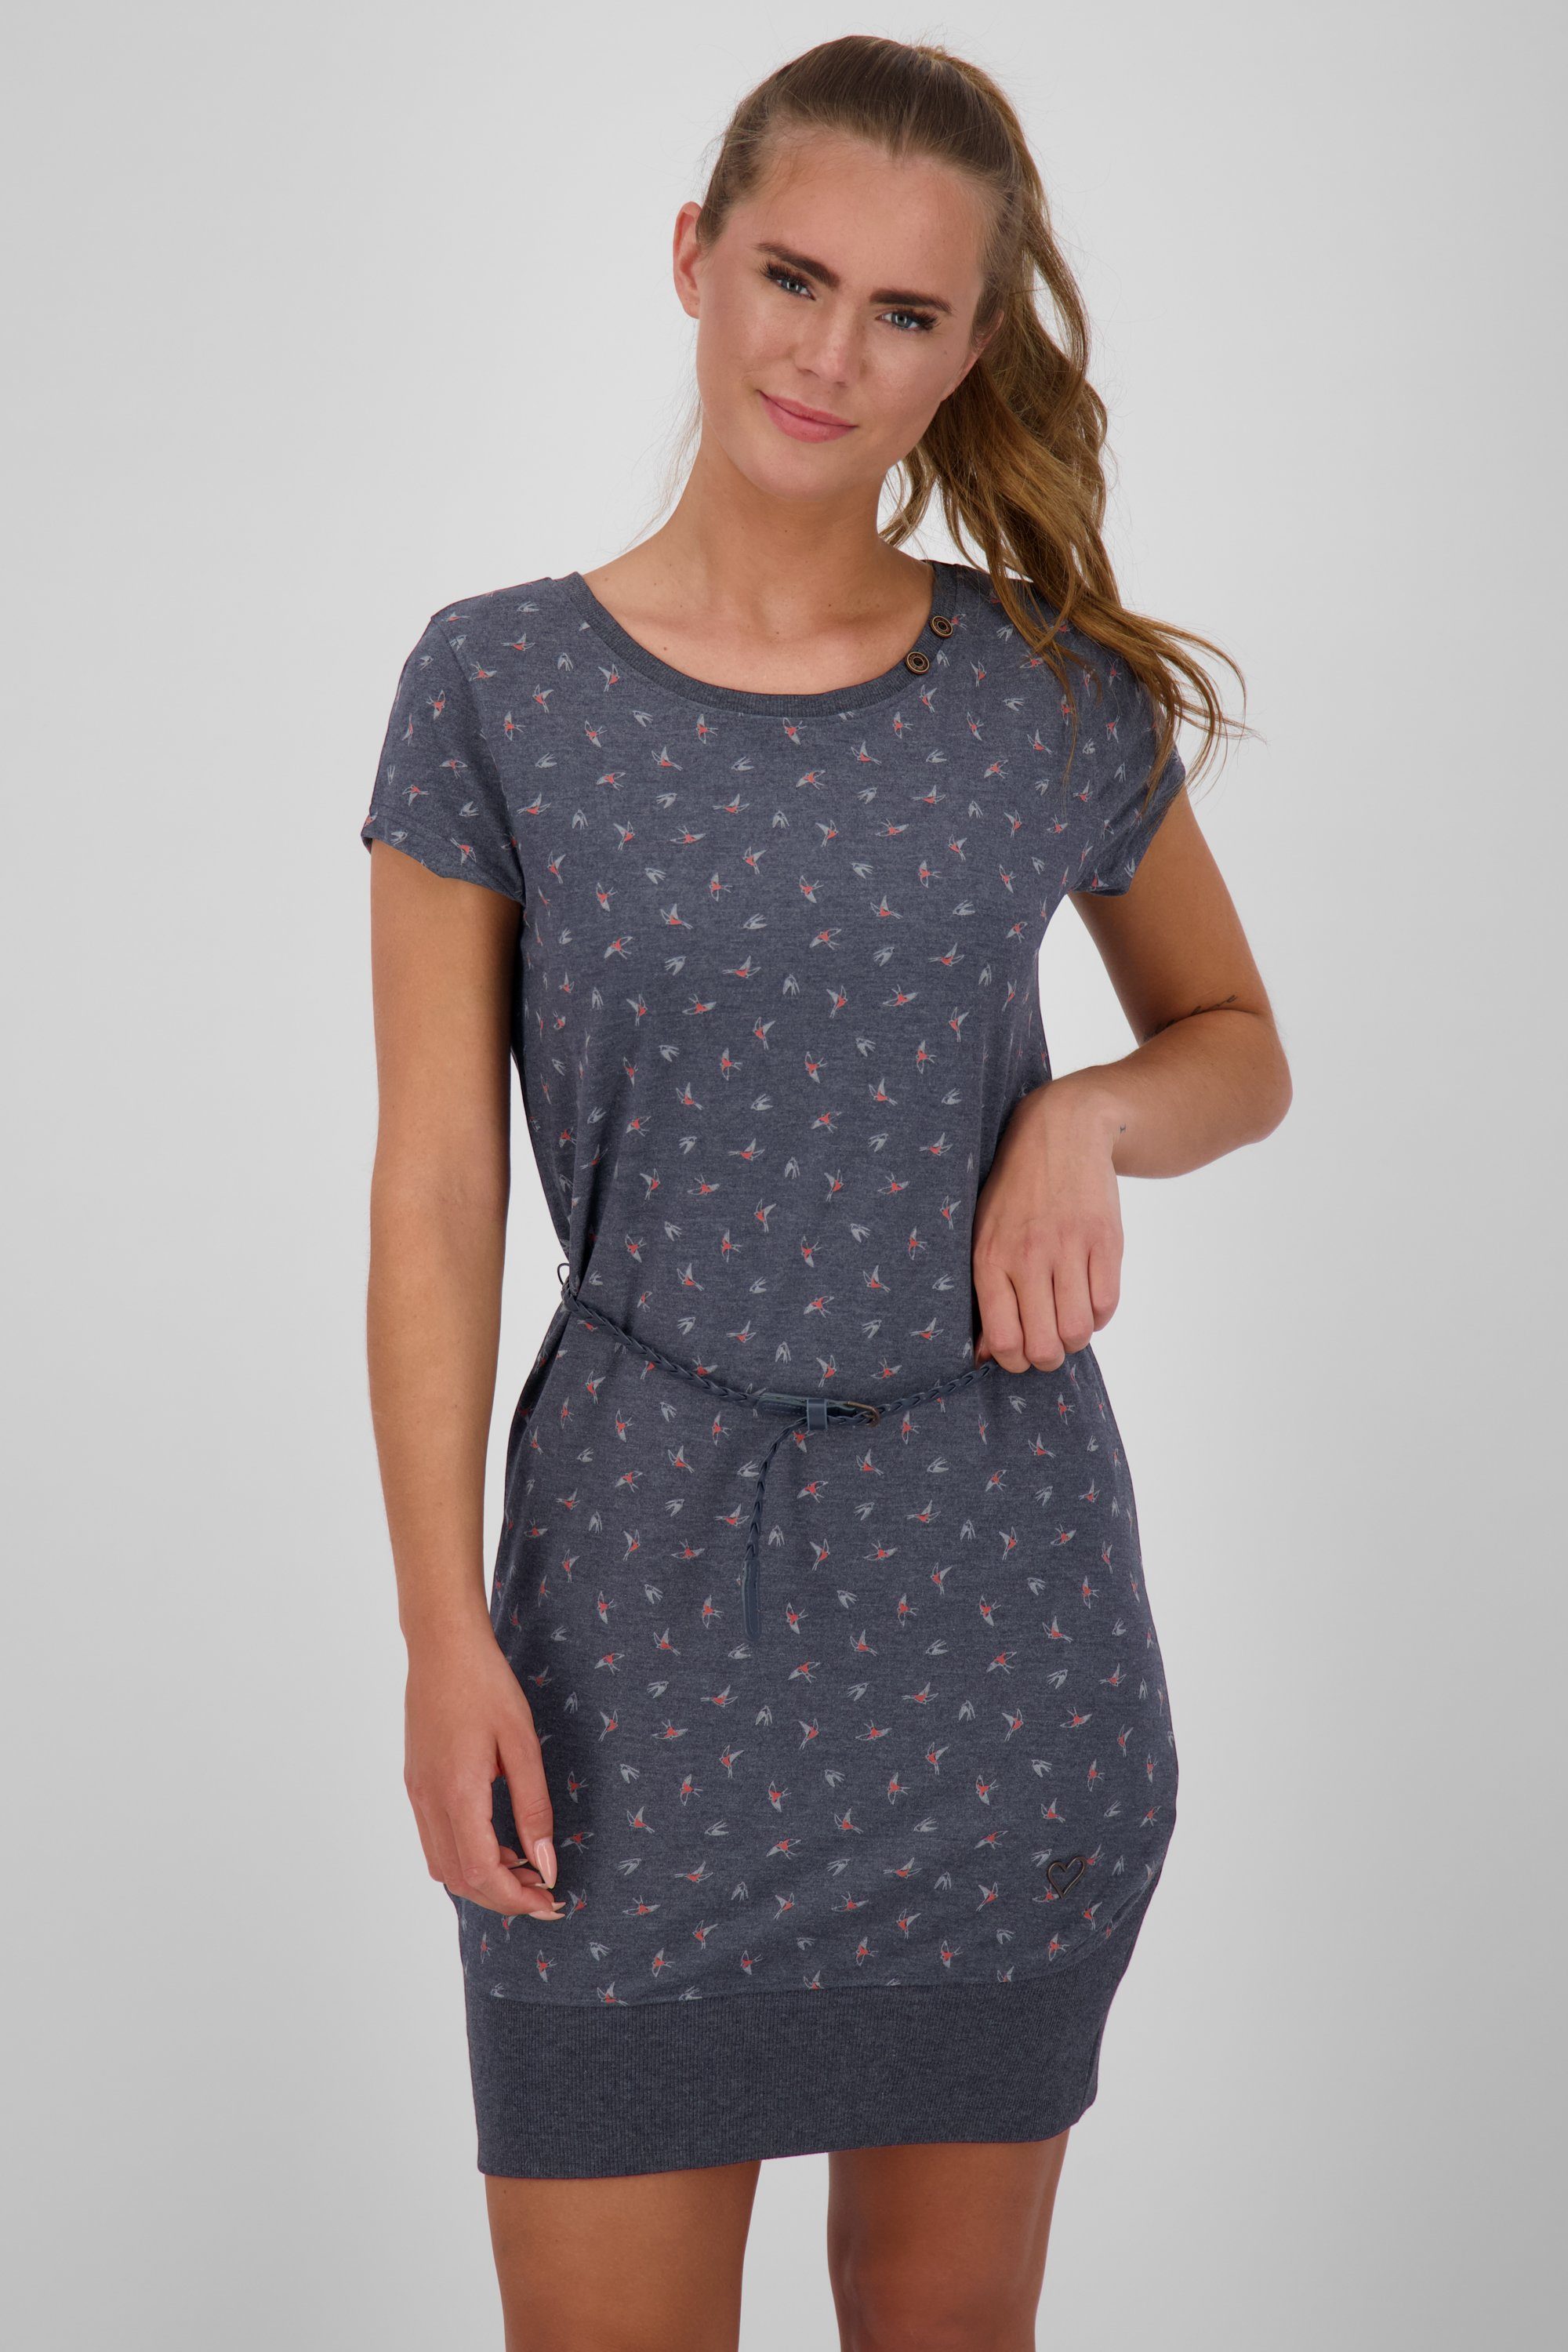 Alife & Kickin Blusenkleid CocoAK Dress Damen Sommerkleid, Kleid marine | Blusenkleider